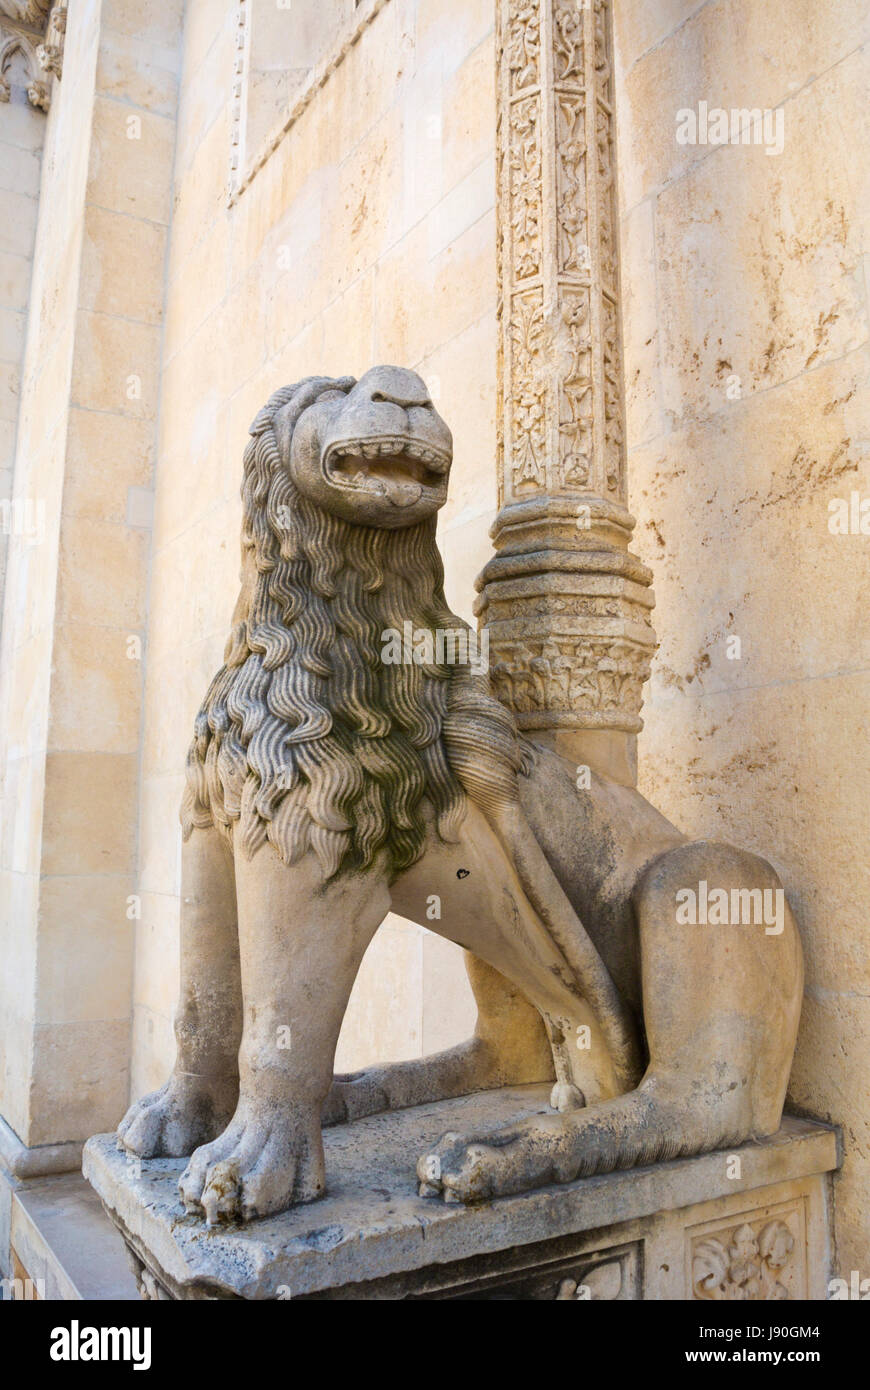 Lion of Venice, symbol of Venetian power, Katedrala sv Jakova, Sveti Jakov, cathedral of Saint James, Trg Republike Hrvatske, old town, Sibenik, Dalma Stock Photo